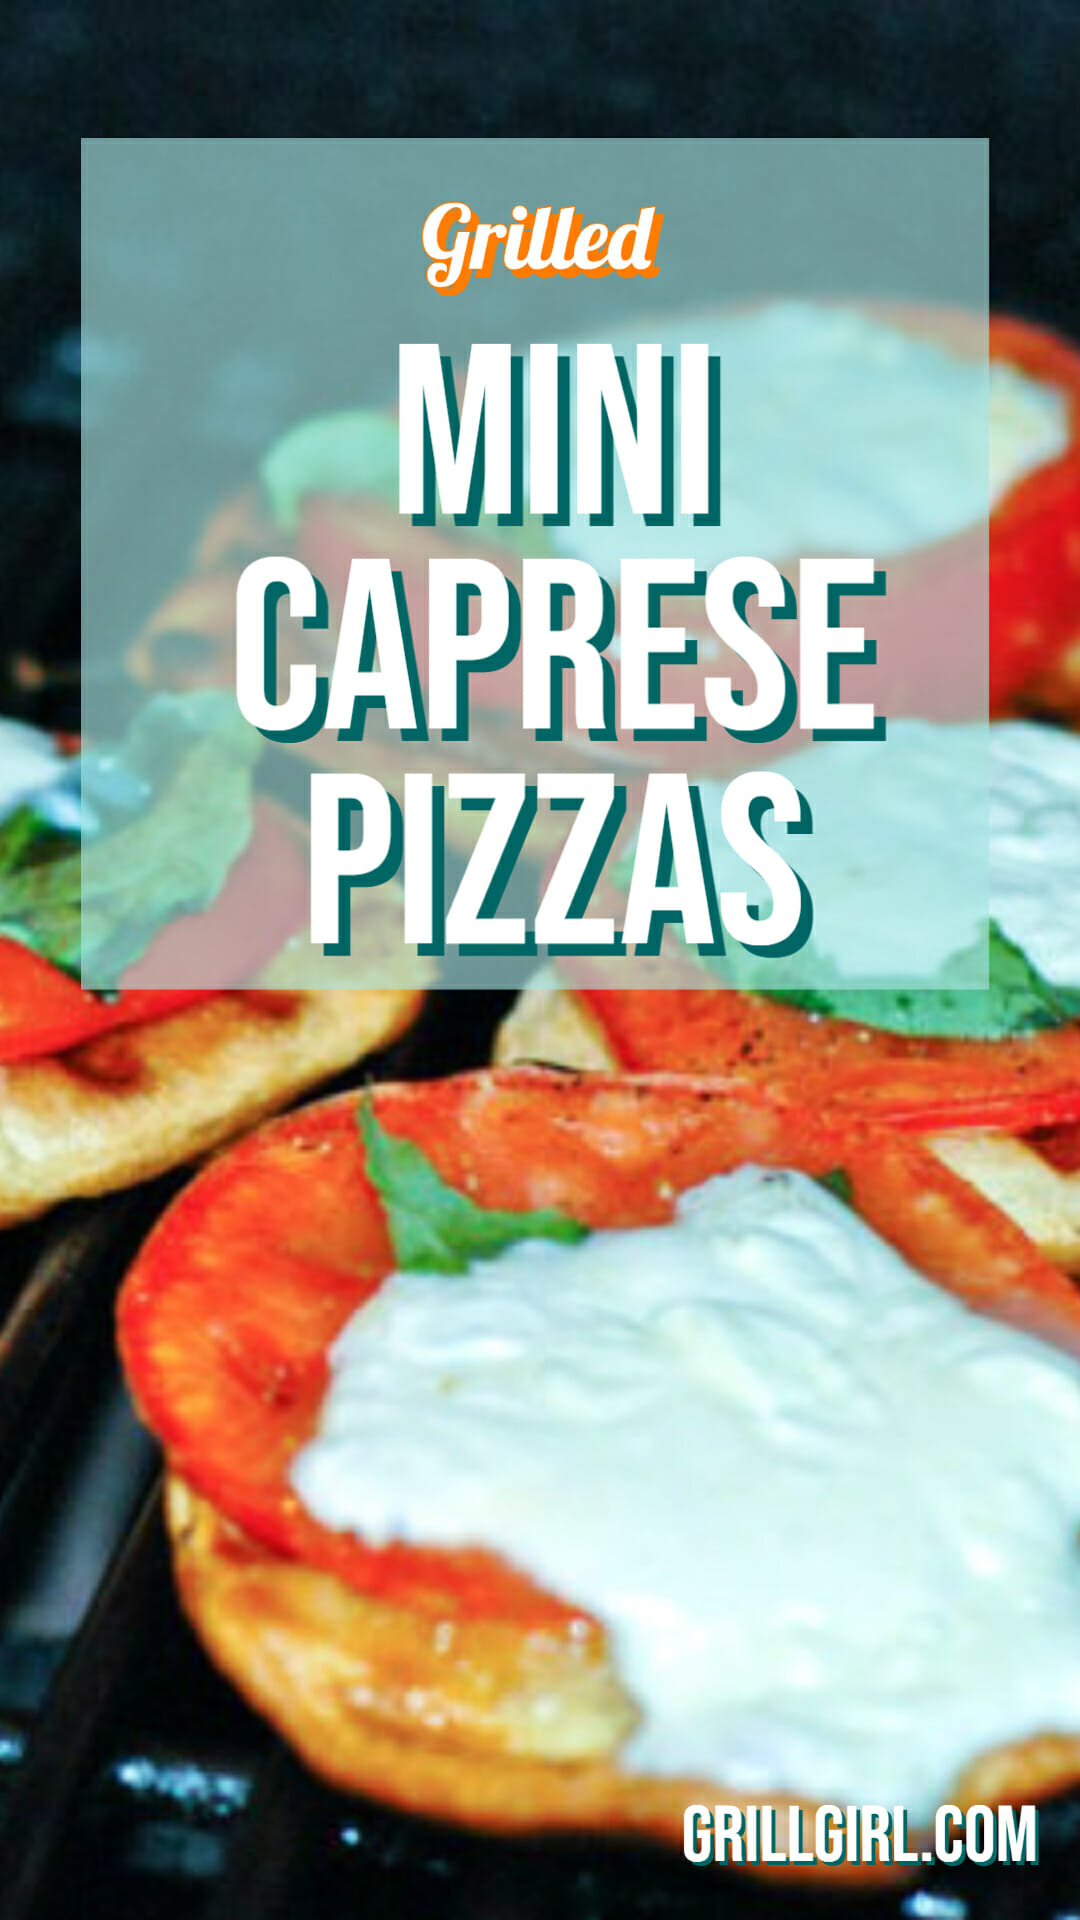 Grilled mini caprese pizzas recipe